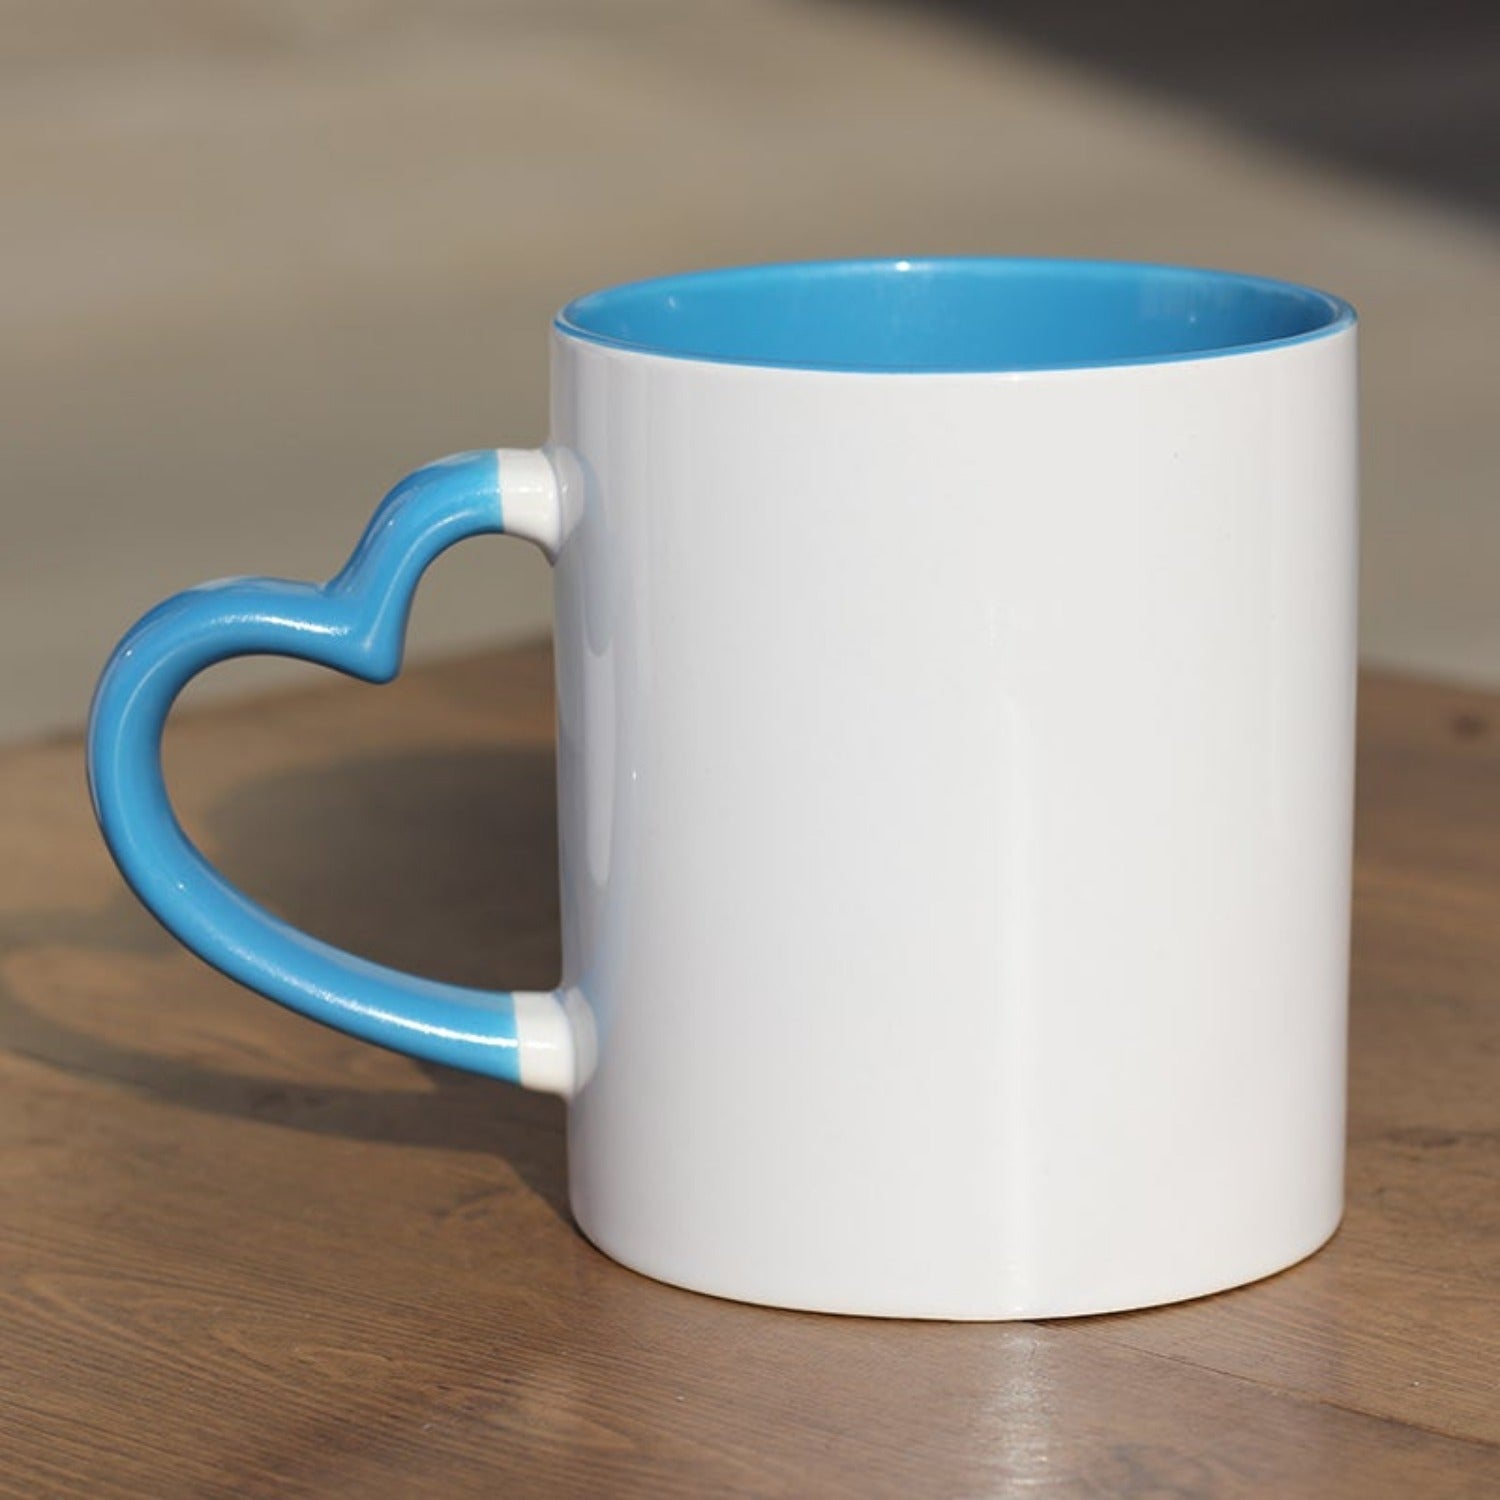 Personalized Mugs: Custom Printed Photo Mugs